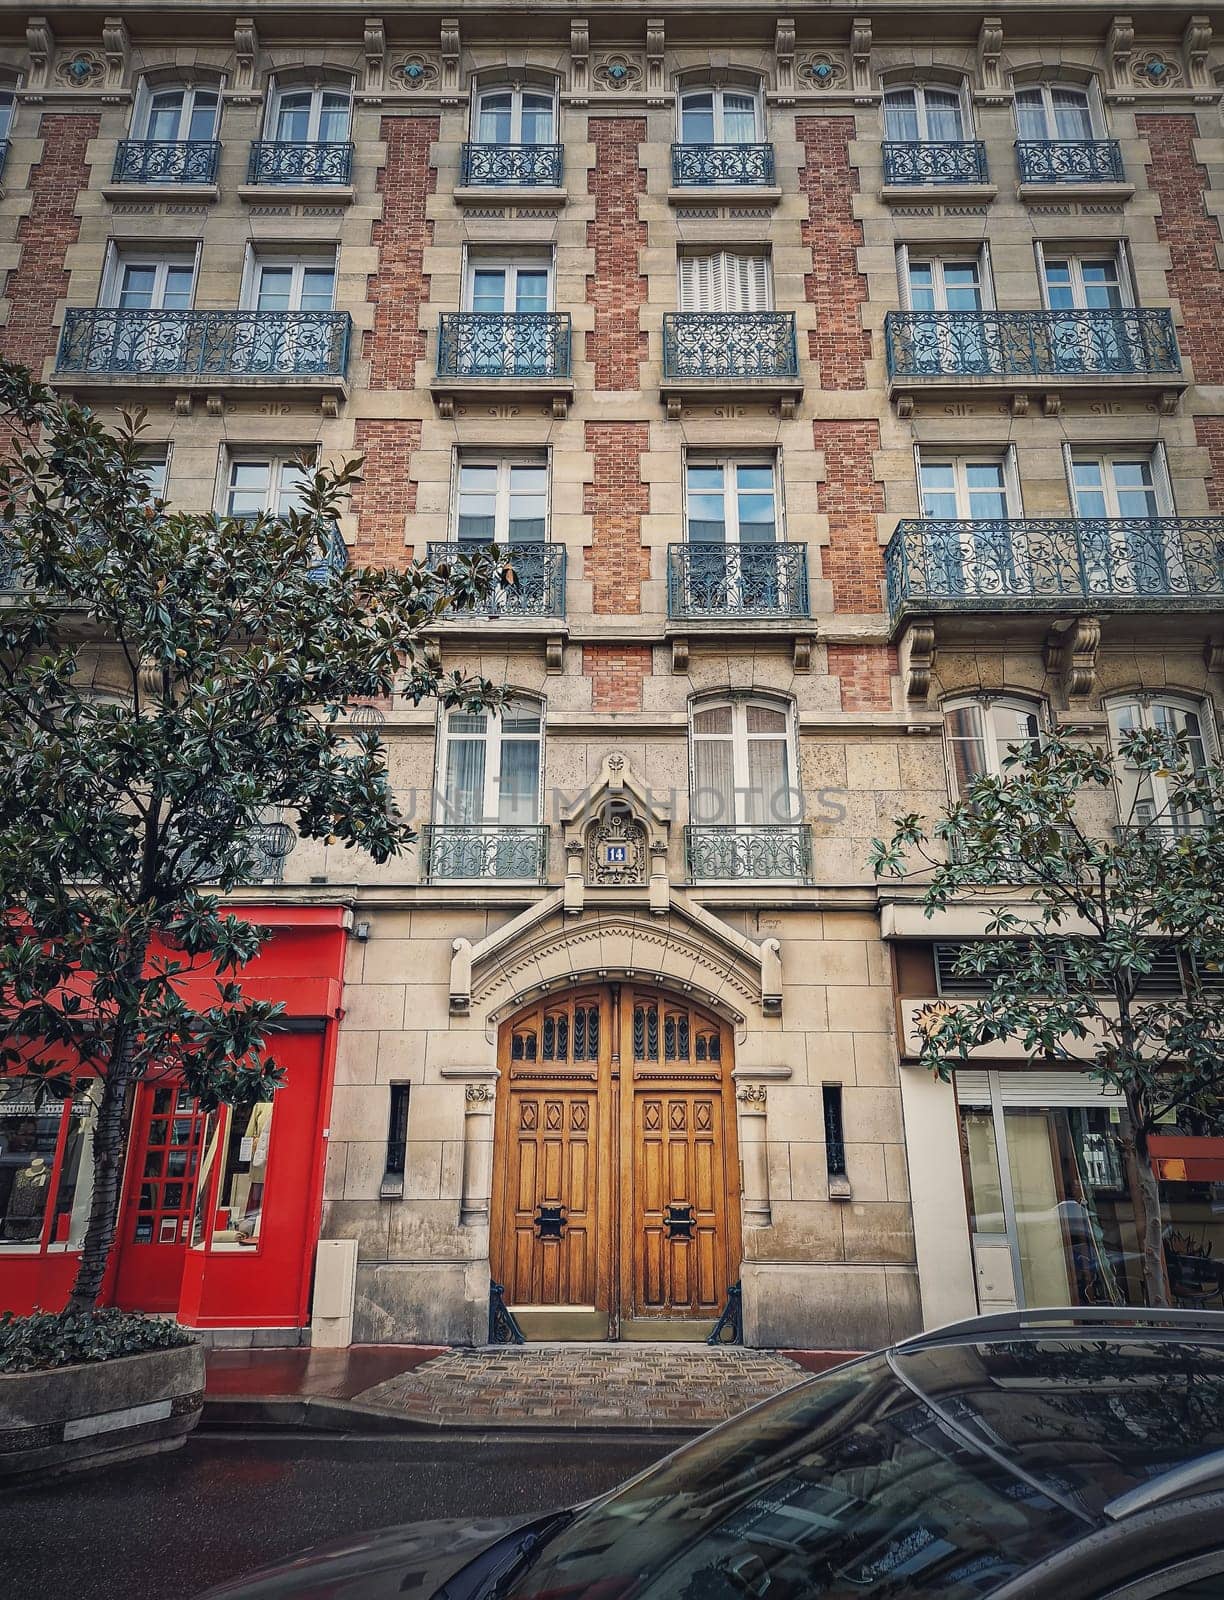 Parisian building facade. Vintage architectural details by psychoshadow